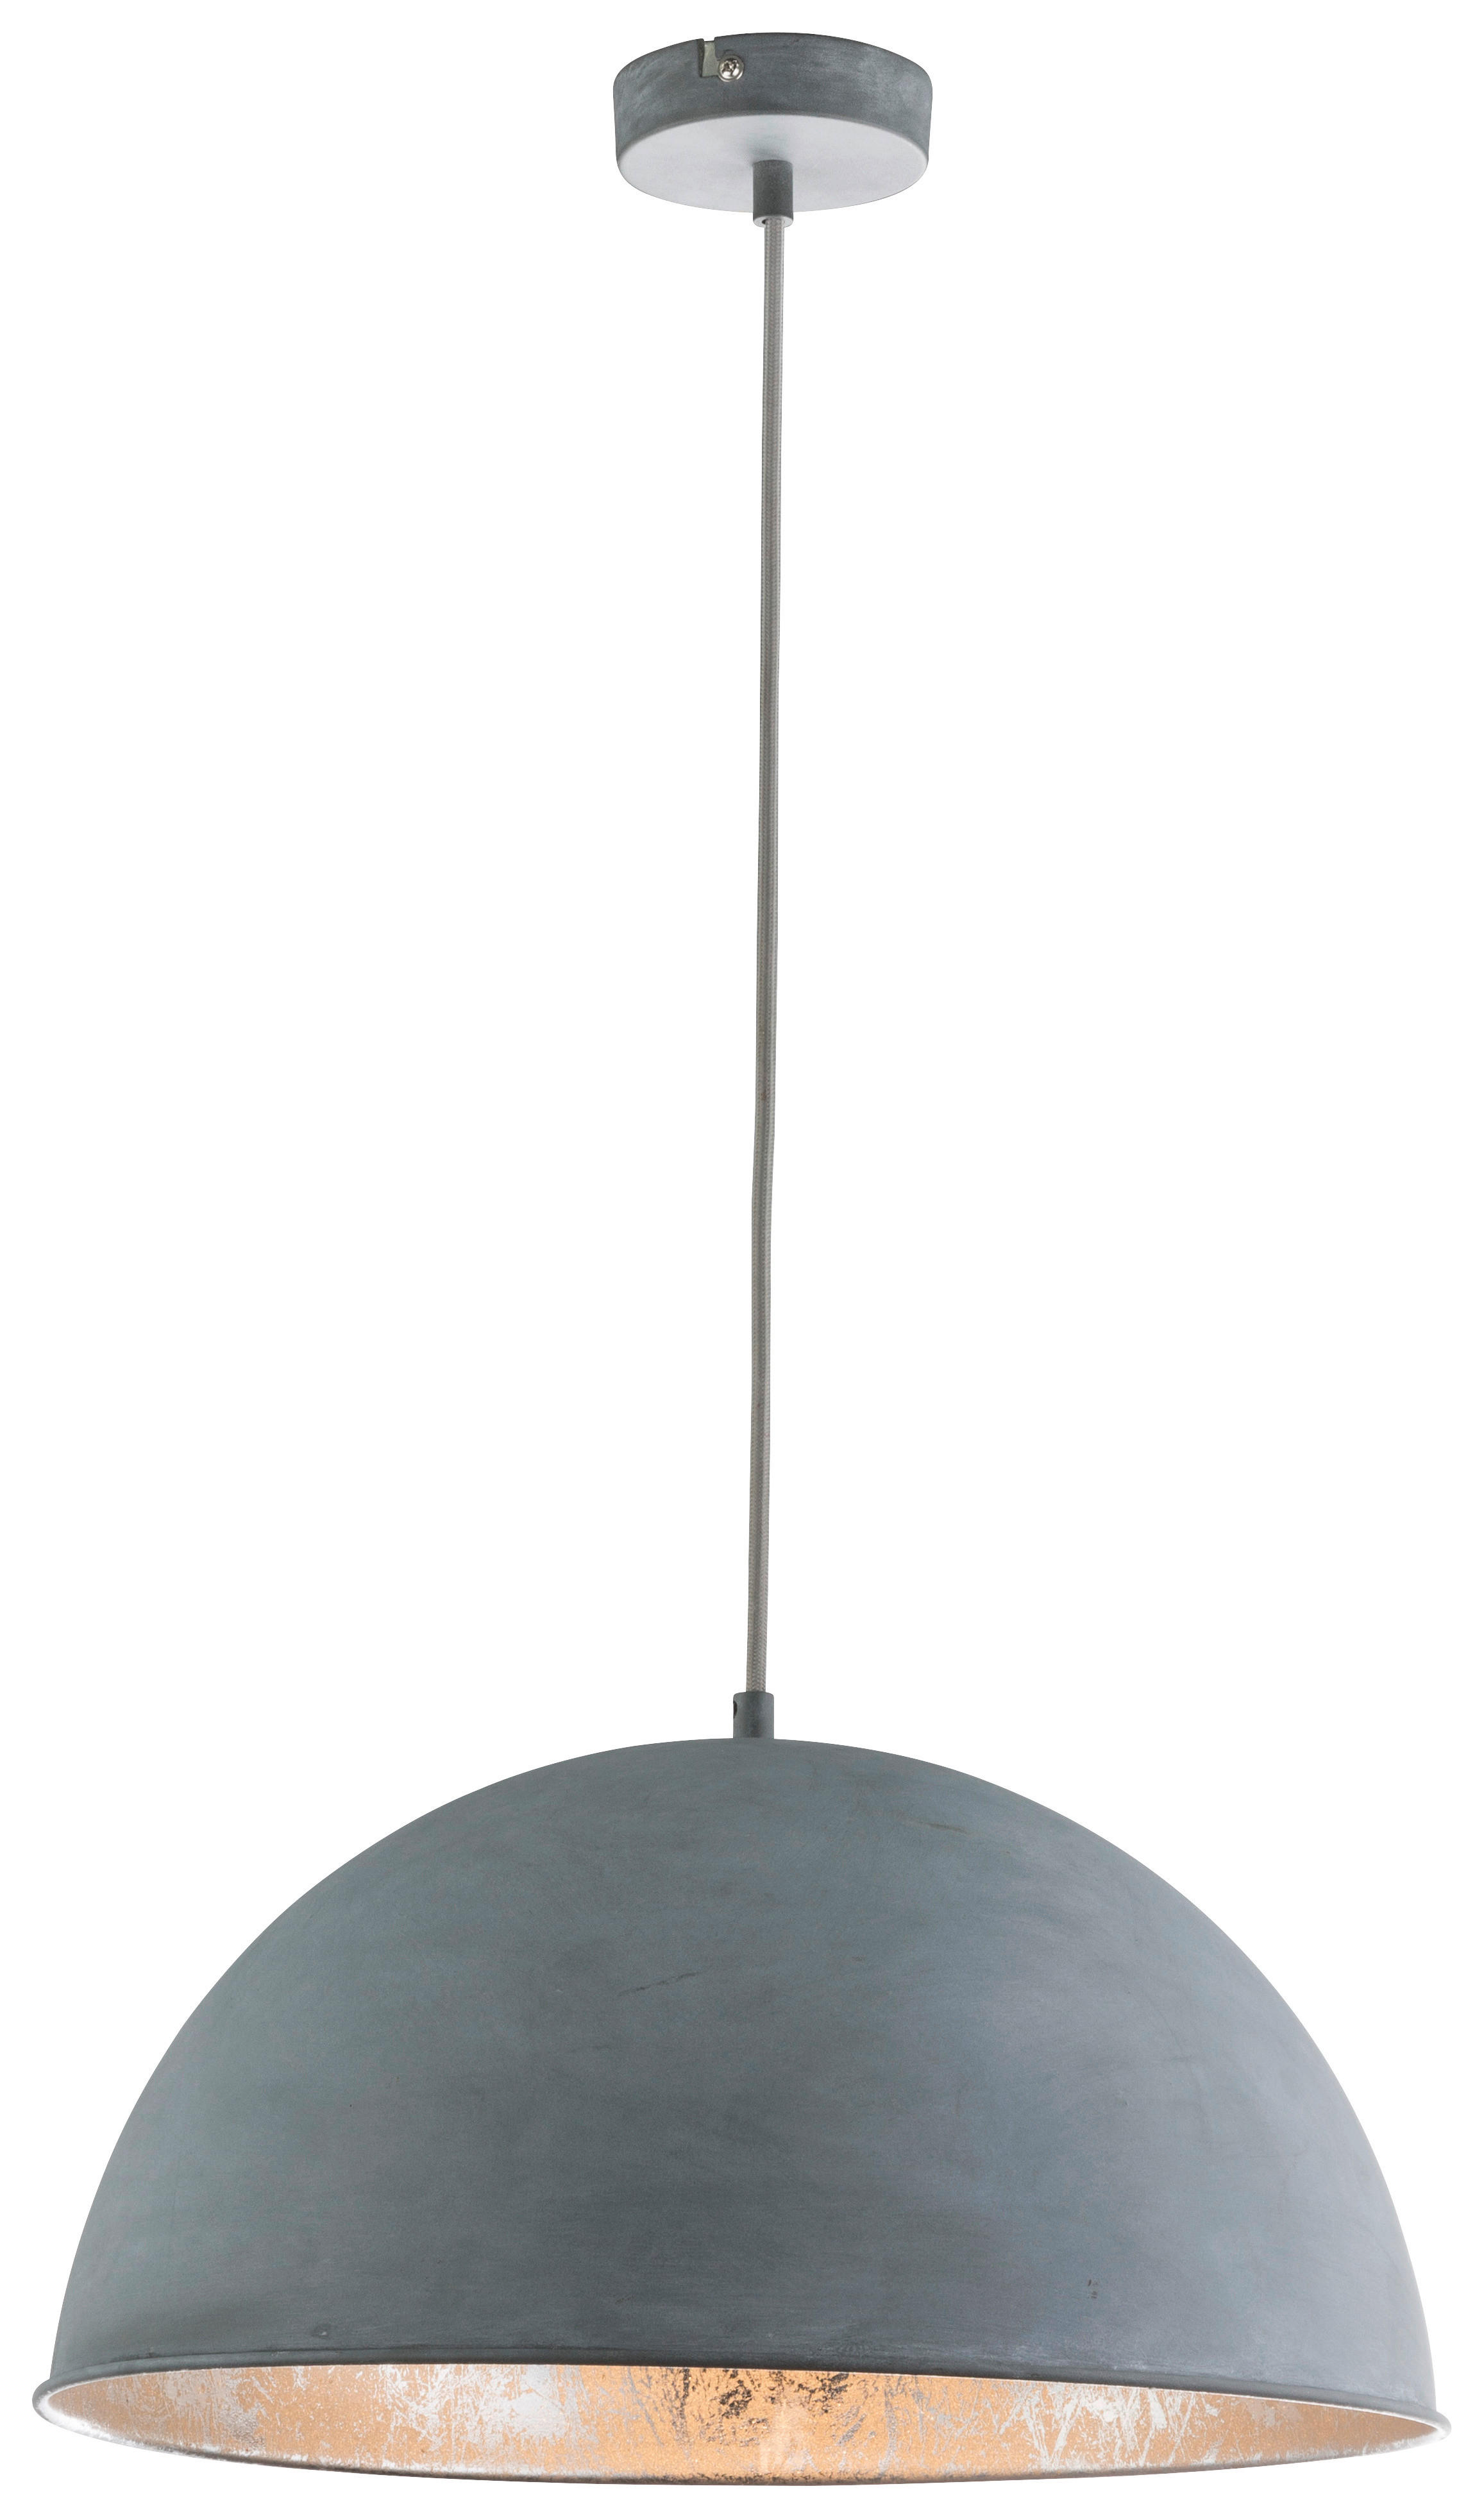 HÄNGELEUCHTE 41/120 cm   - Grau, Design, Metall (41/120cm) - Globo